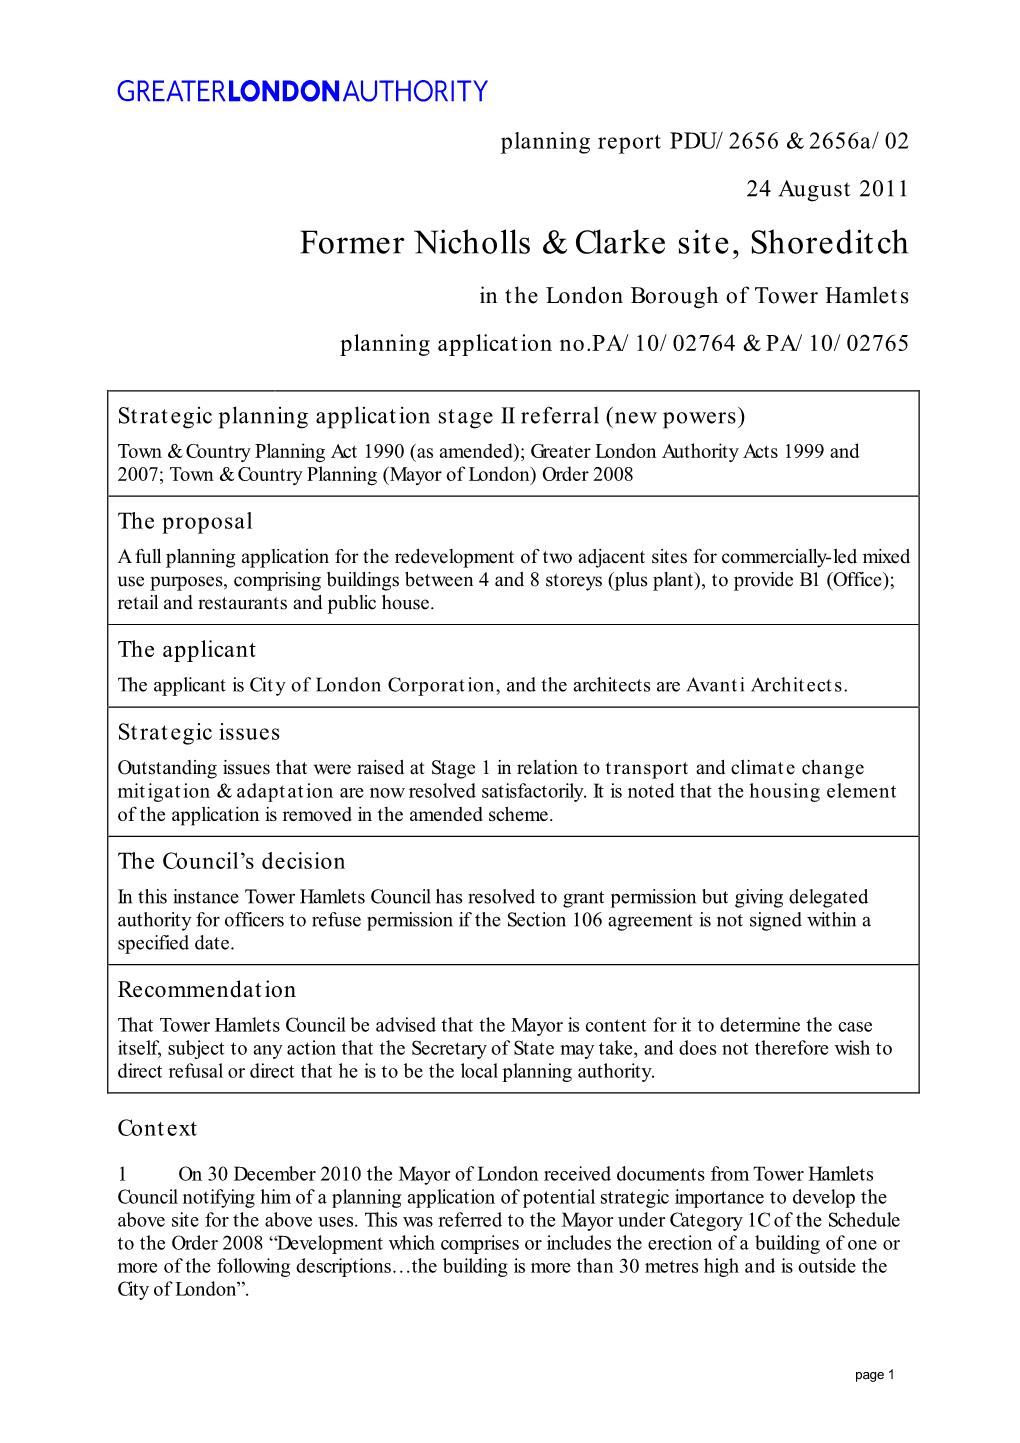 Former Nicholls & Clarke Site, Shoreditch